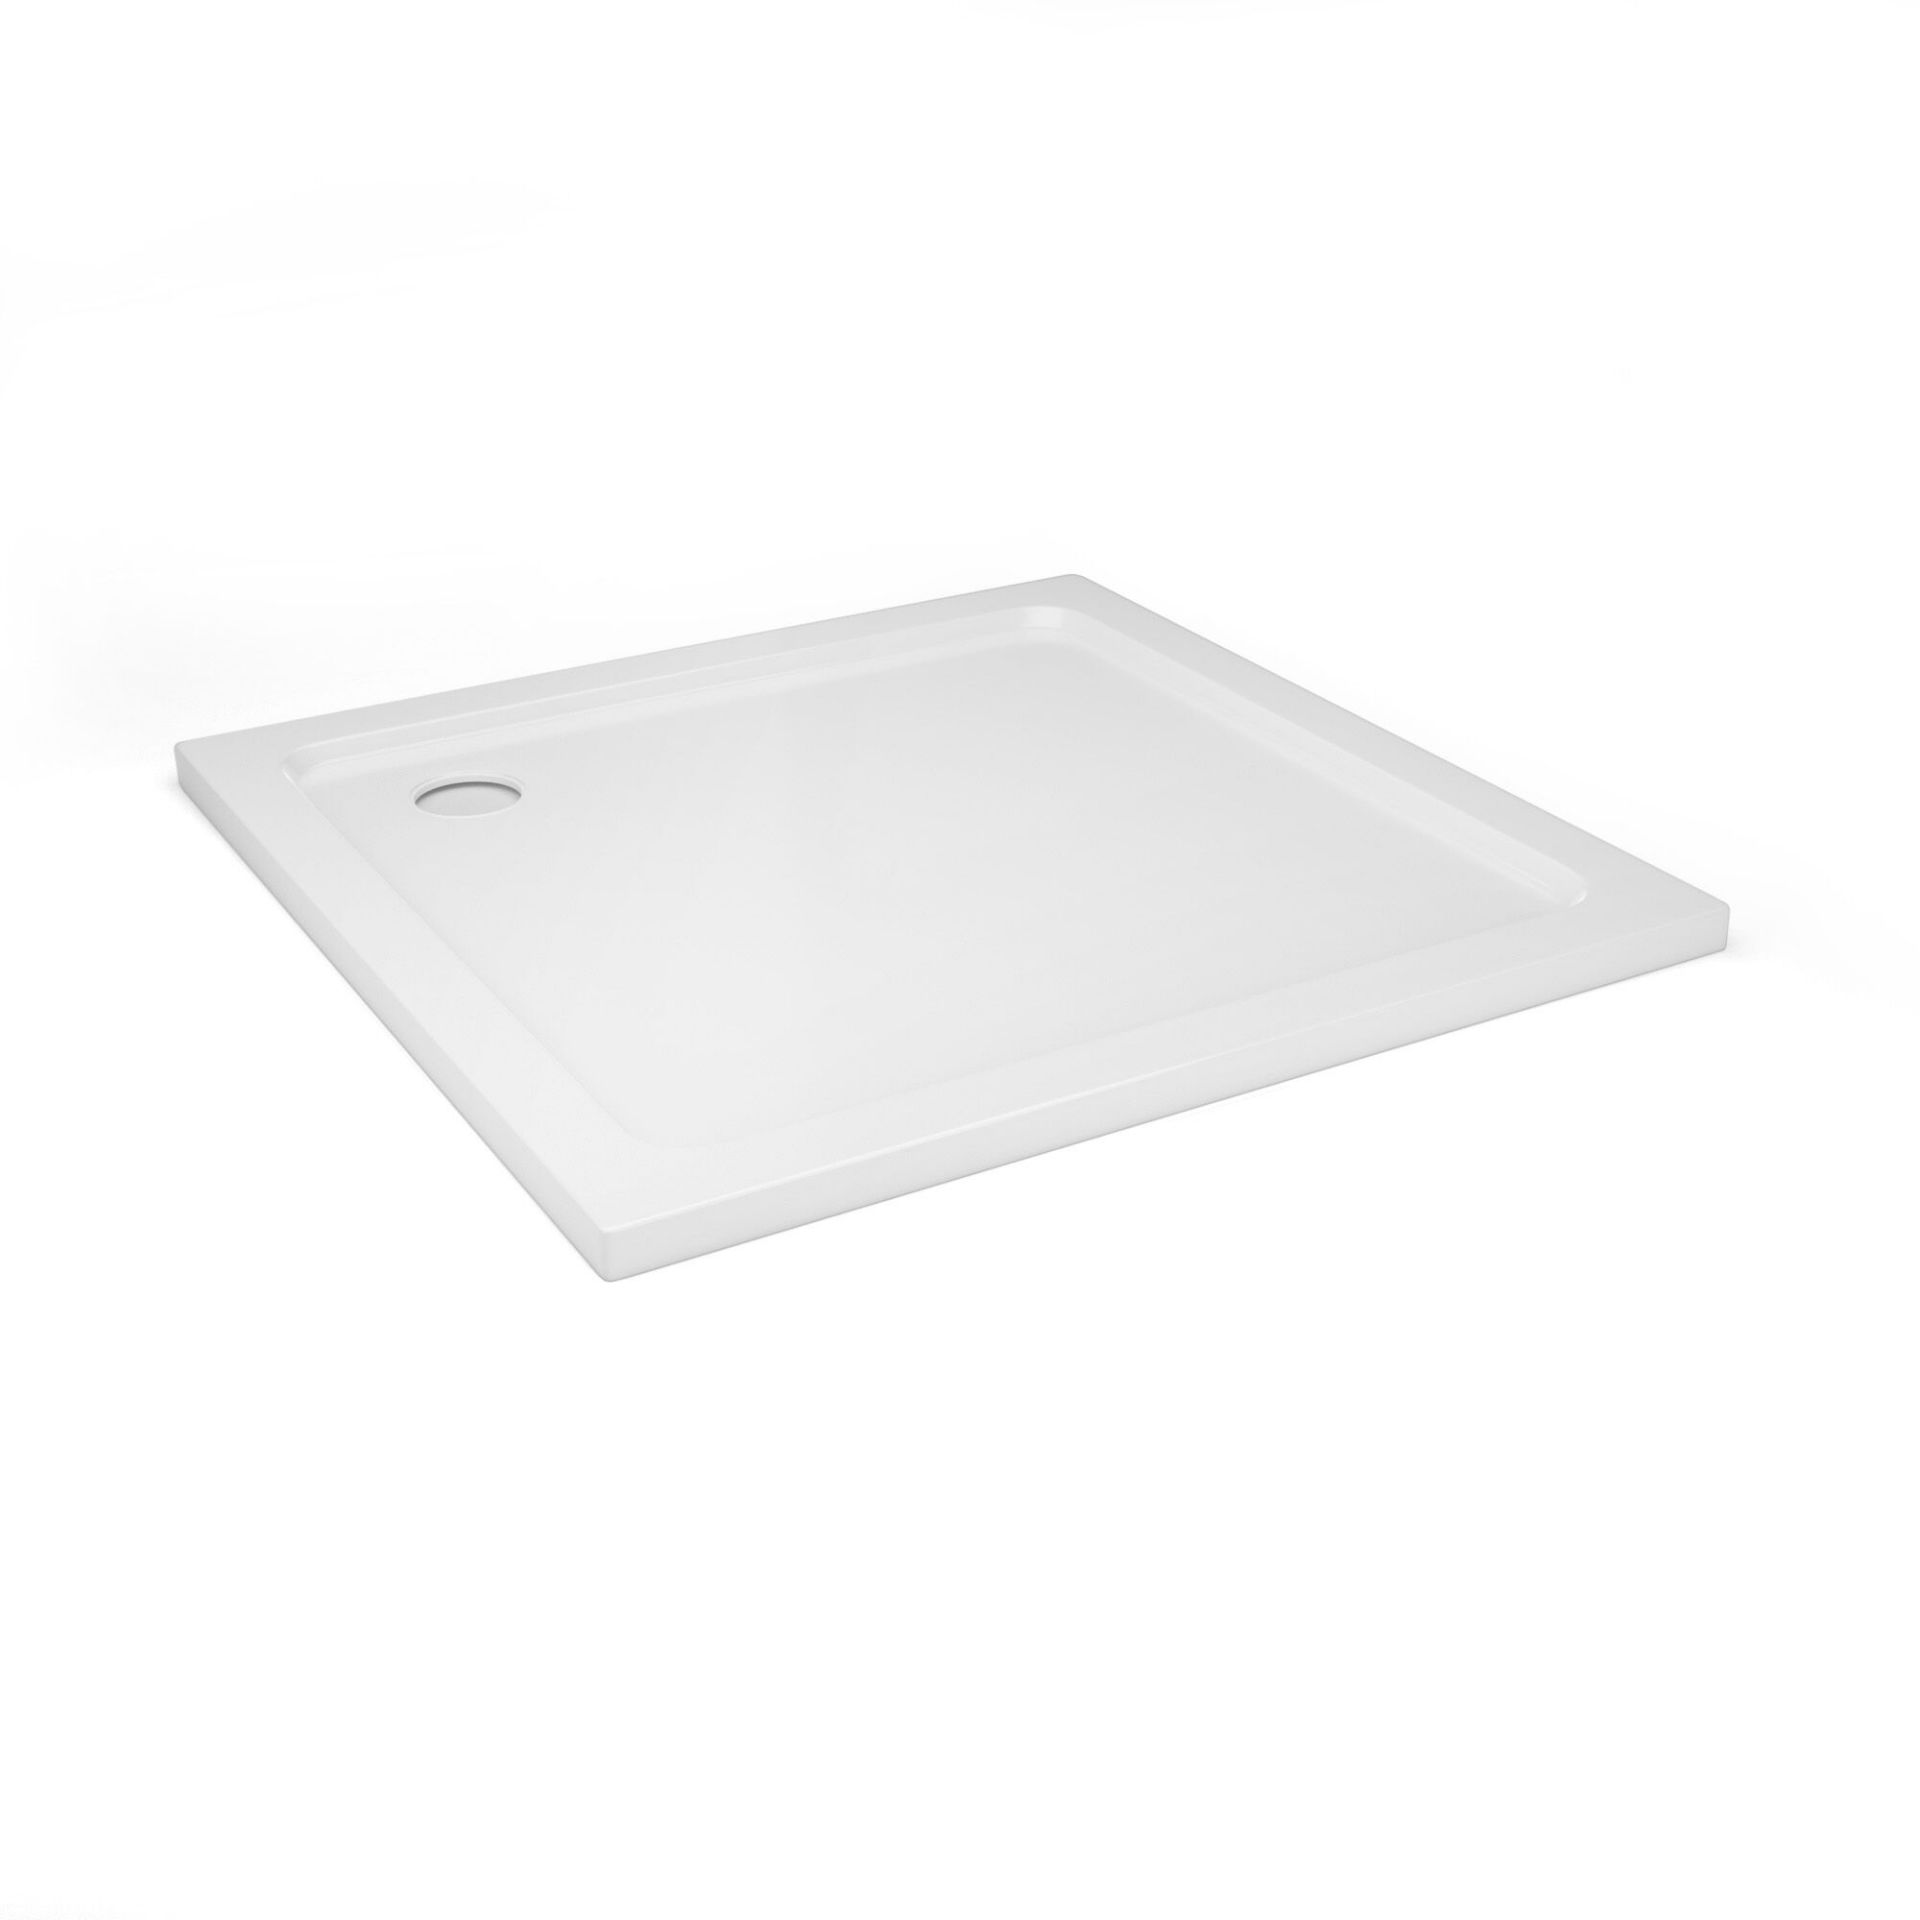 (J129) 900x900mm Square Ultra Slim Stone Shower Tray. Low profile ultra slim design Gel coate... - Image 2 of 2